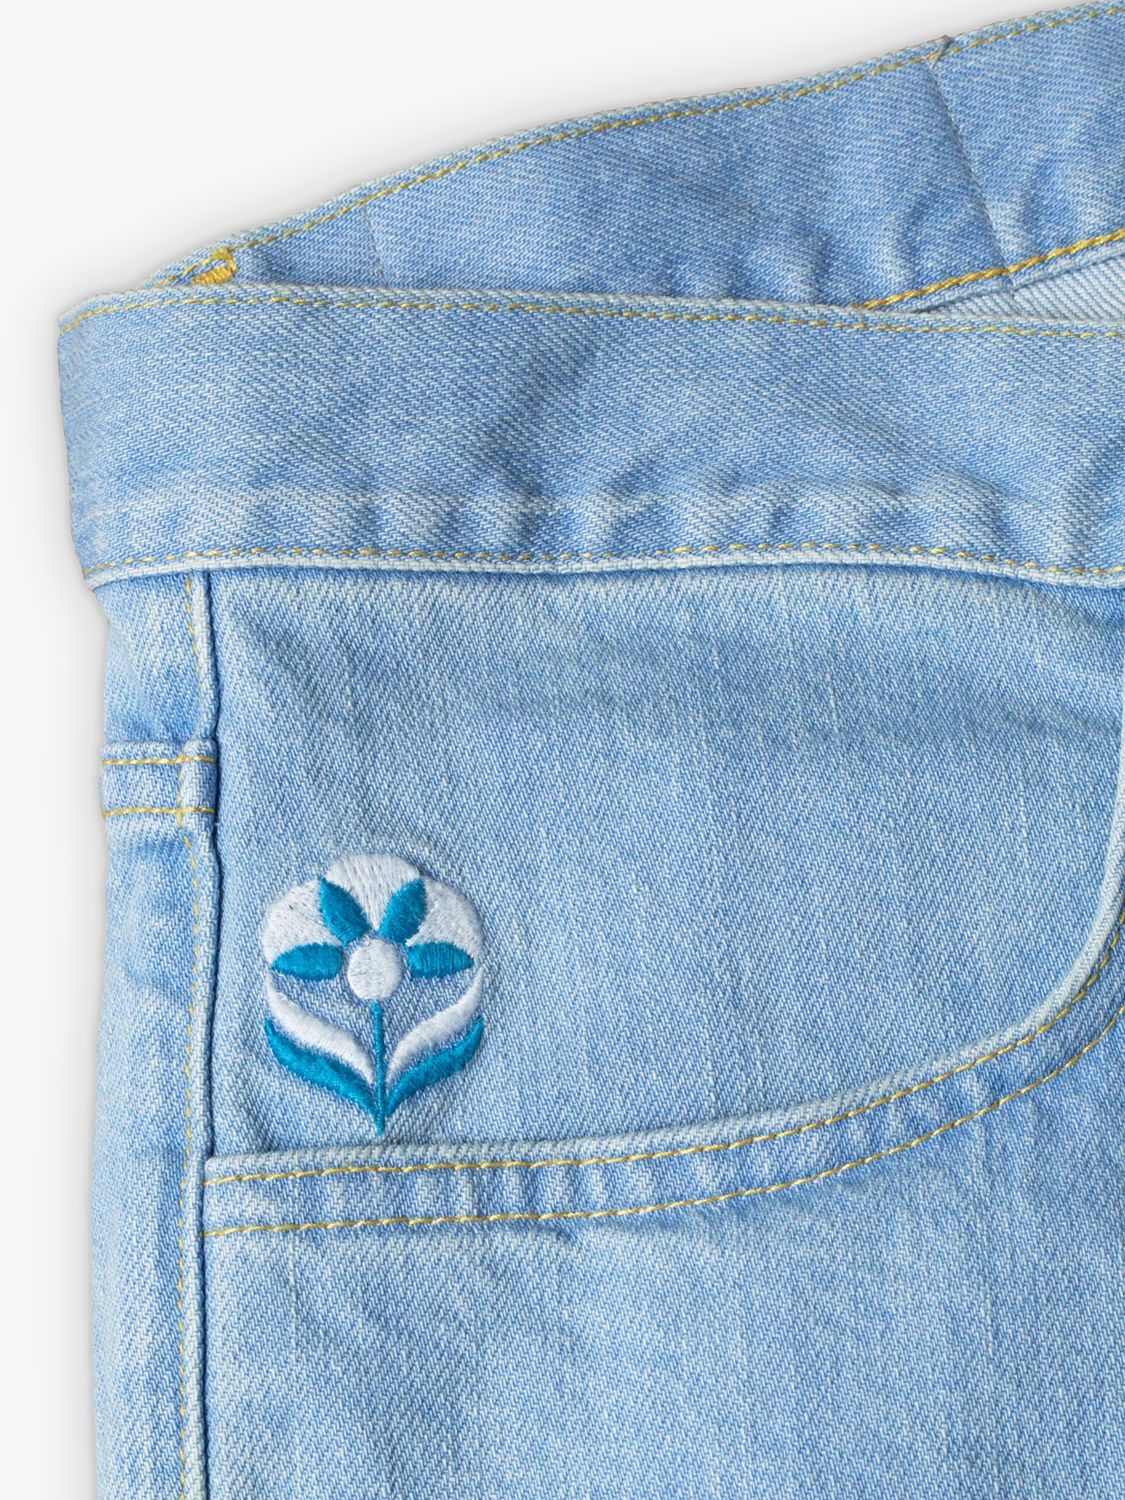 Buy Blue Flowers Denim Jeans Online at johnlewis.com